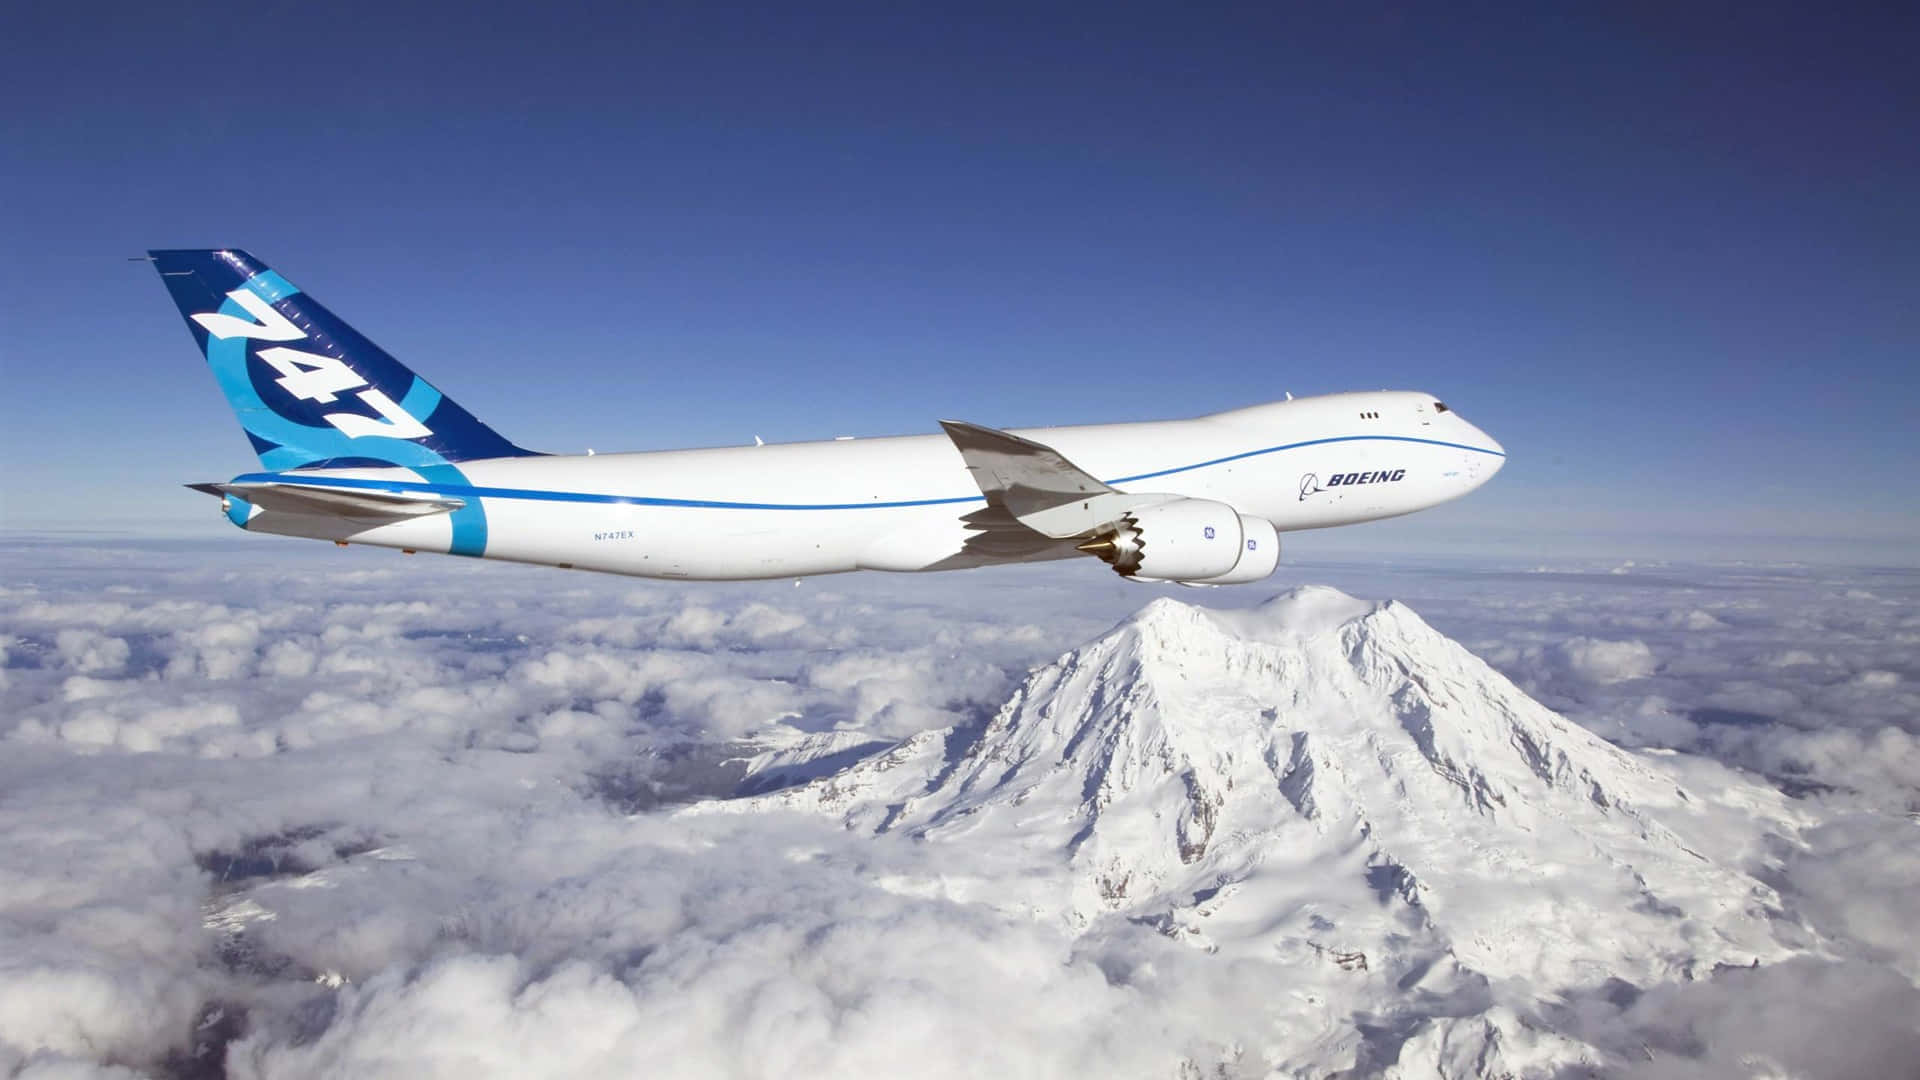 Boeing Snowy Mountain Hd Jumbo Jets Background